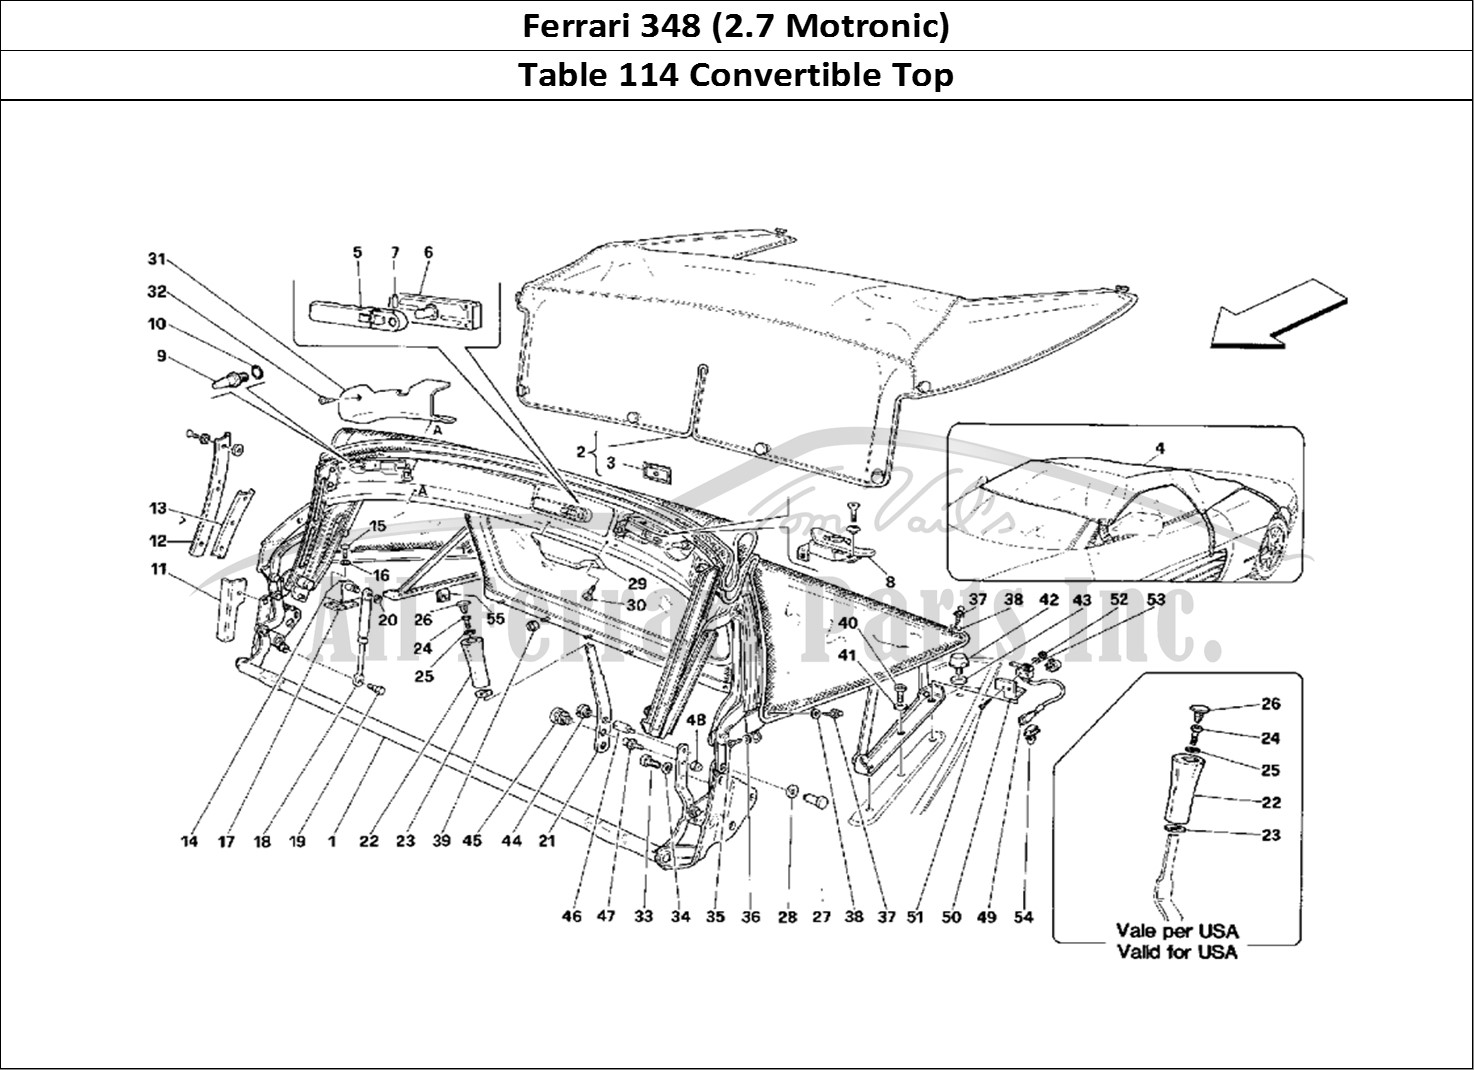 Ferrari Parts Ferrari 348 (2.7 Motronic) Page 114 Top -Valid for Spider-